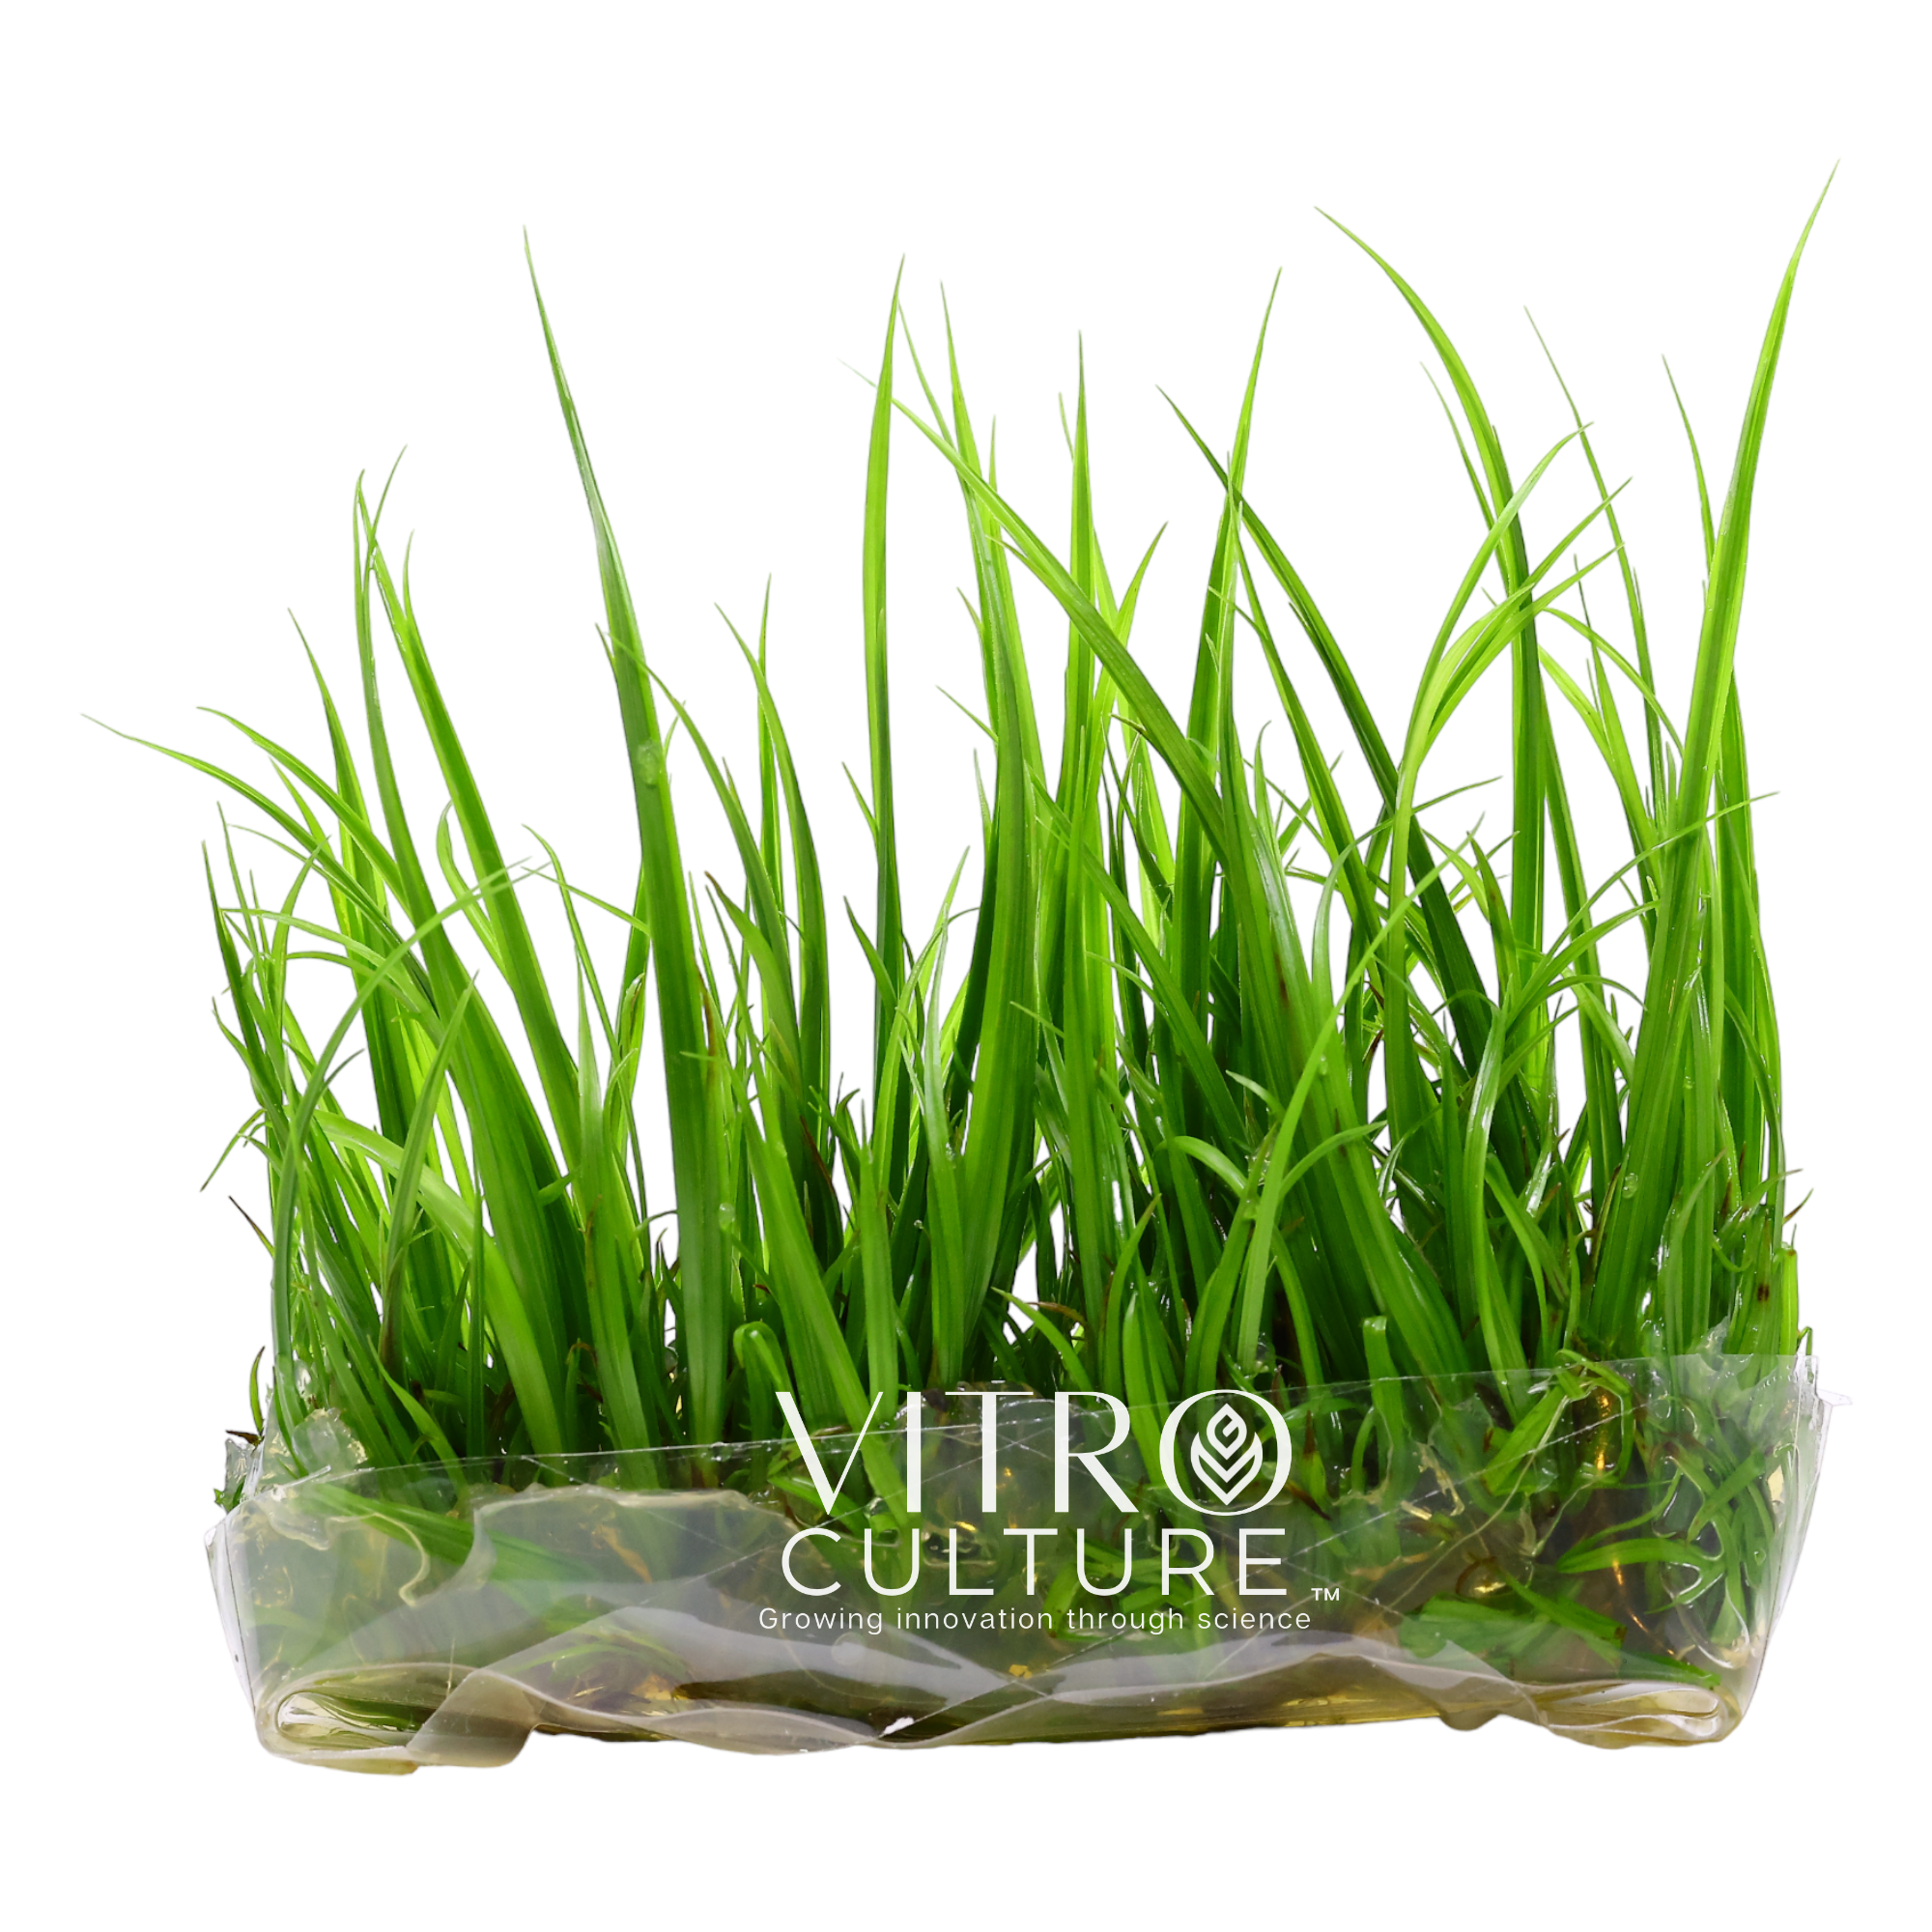 Cyperus Helferi Vitro Culture Grass-like Green Aquarium Plants